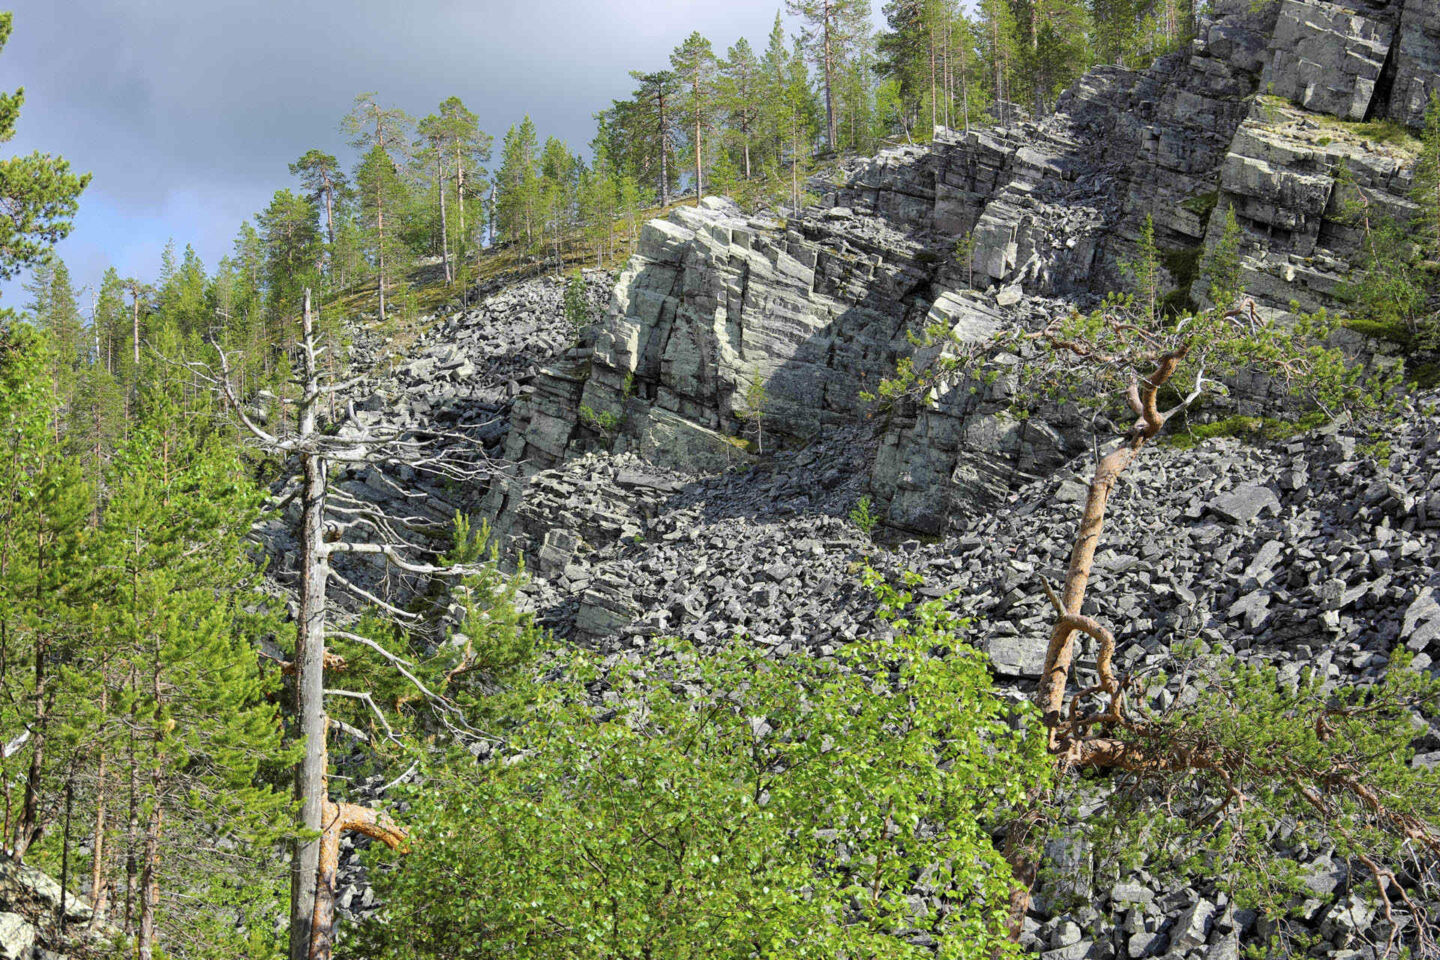 Stony gorge in Pyhä in Pelkosenniemi, a filming location in Finnish Lapland